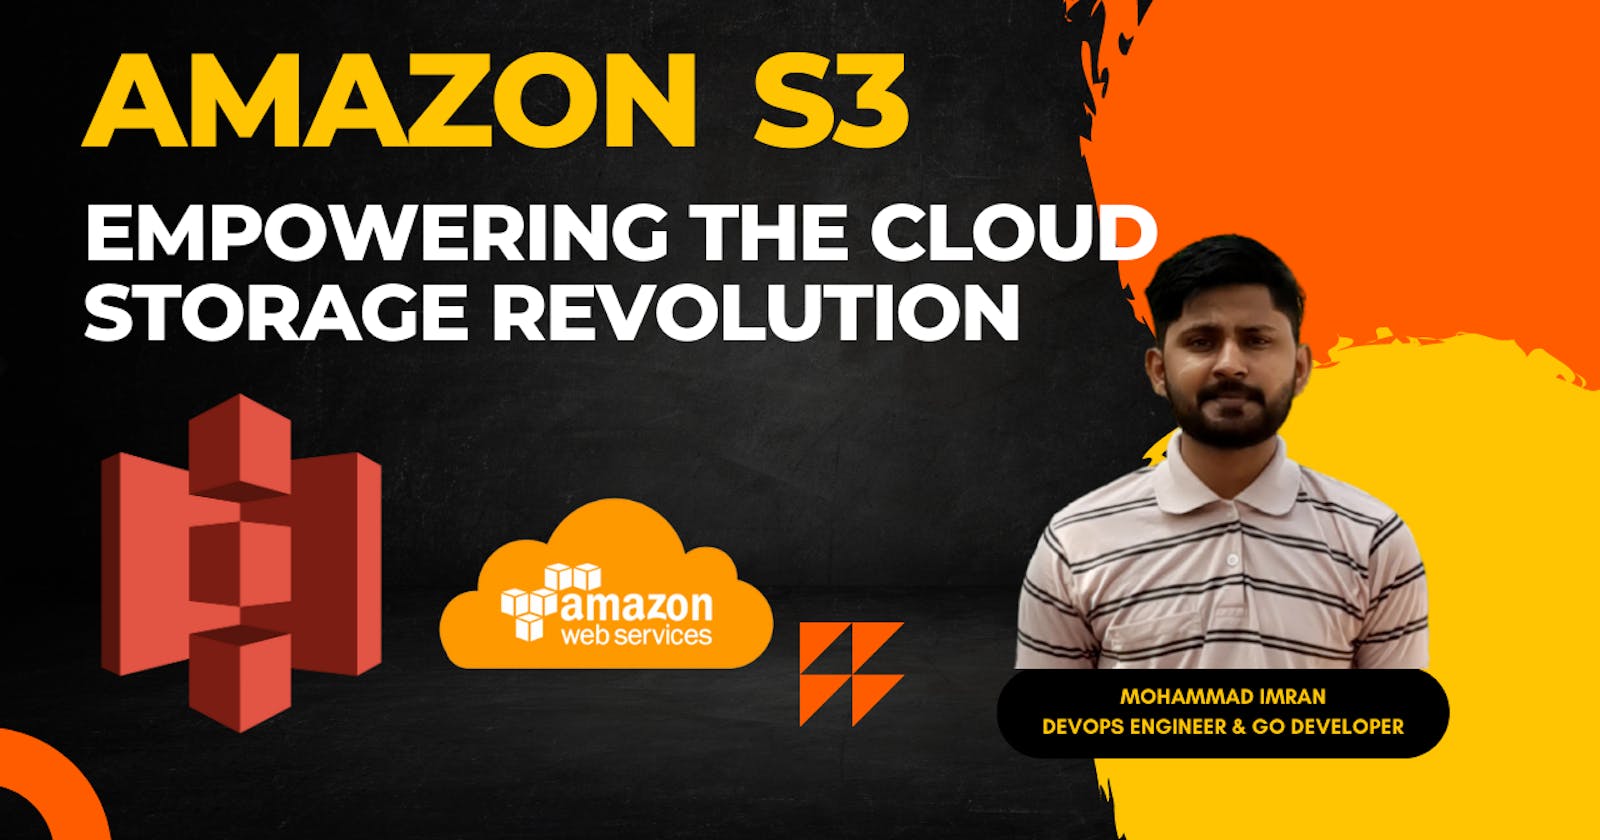 Amazon S3: Empowering the Cloud Storage Revolution